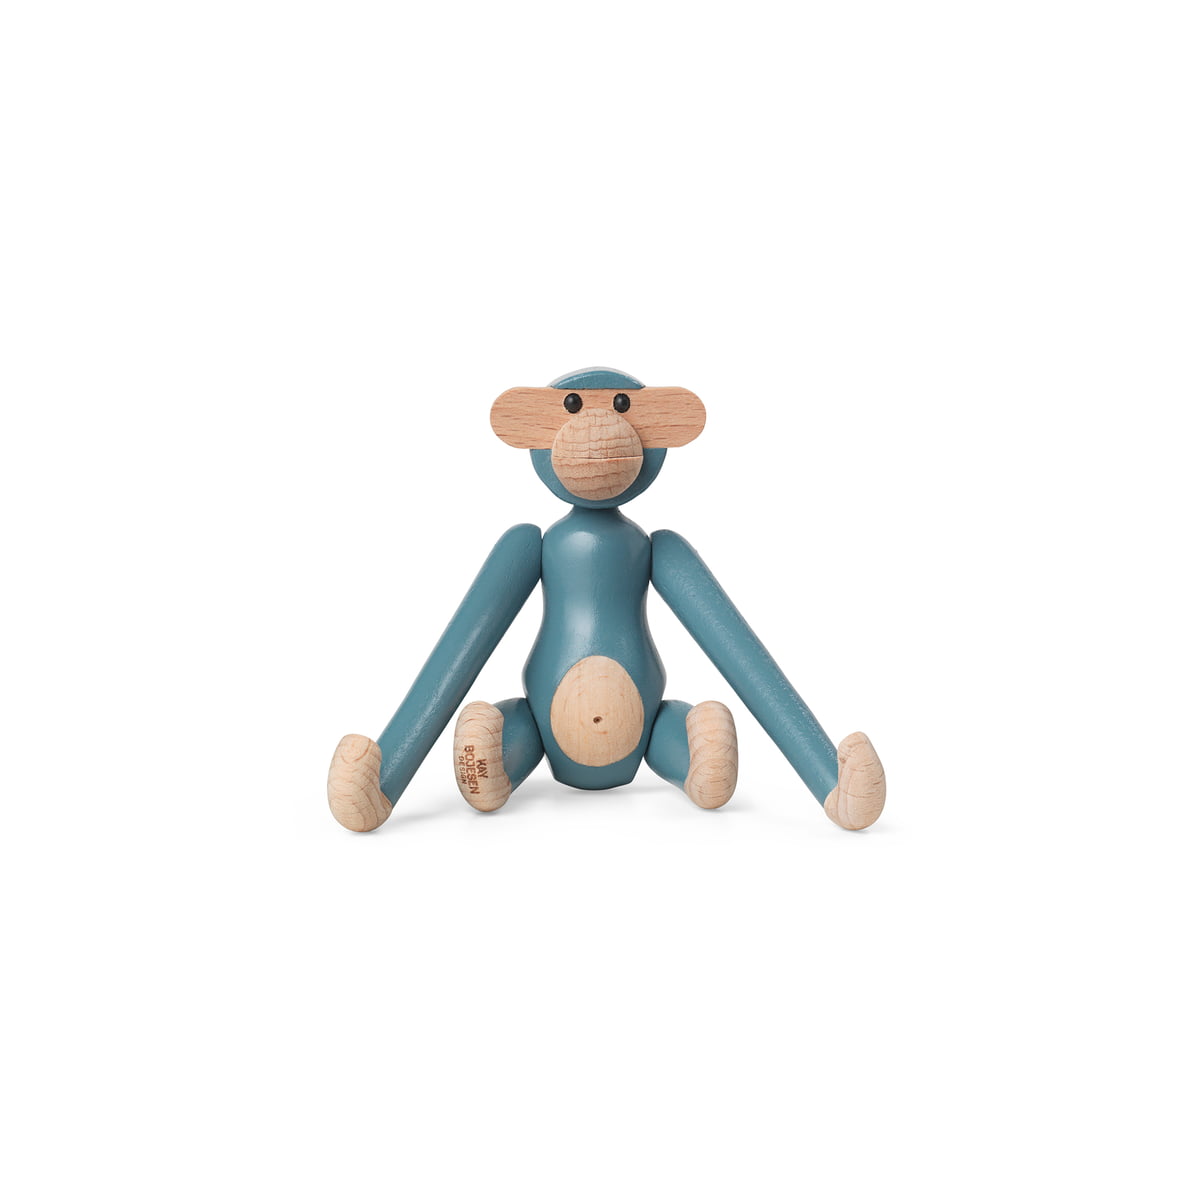 Cute Tiny Monkey Animal Figurines - Mini Toys - Small Novelty Prize To